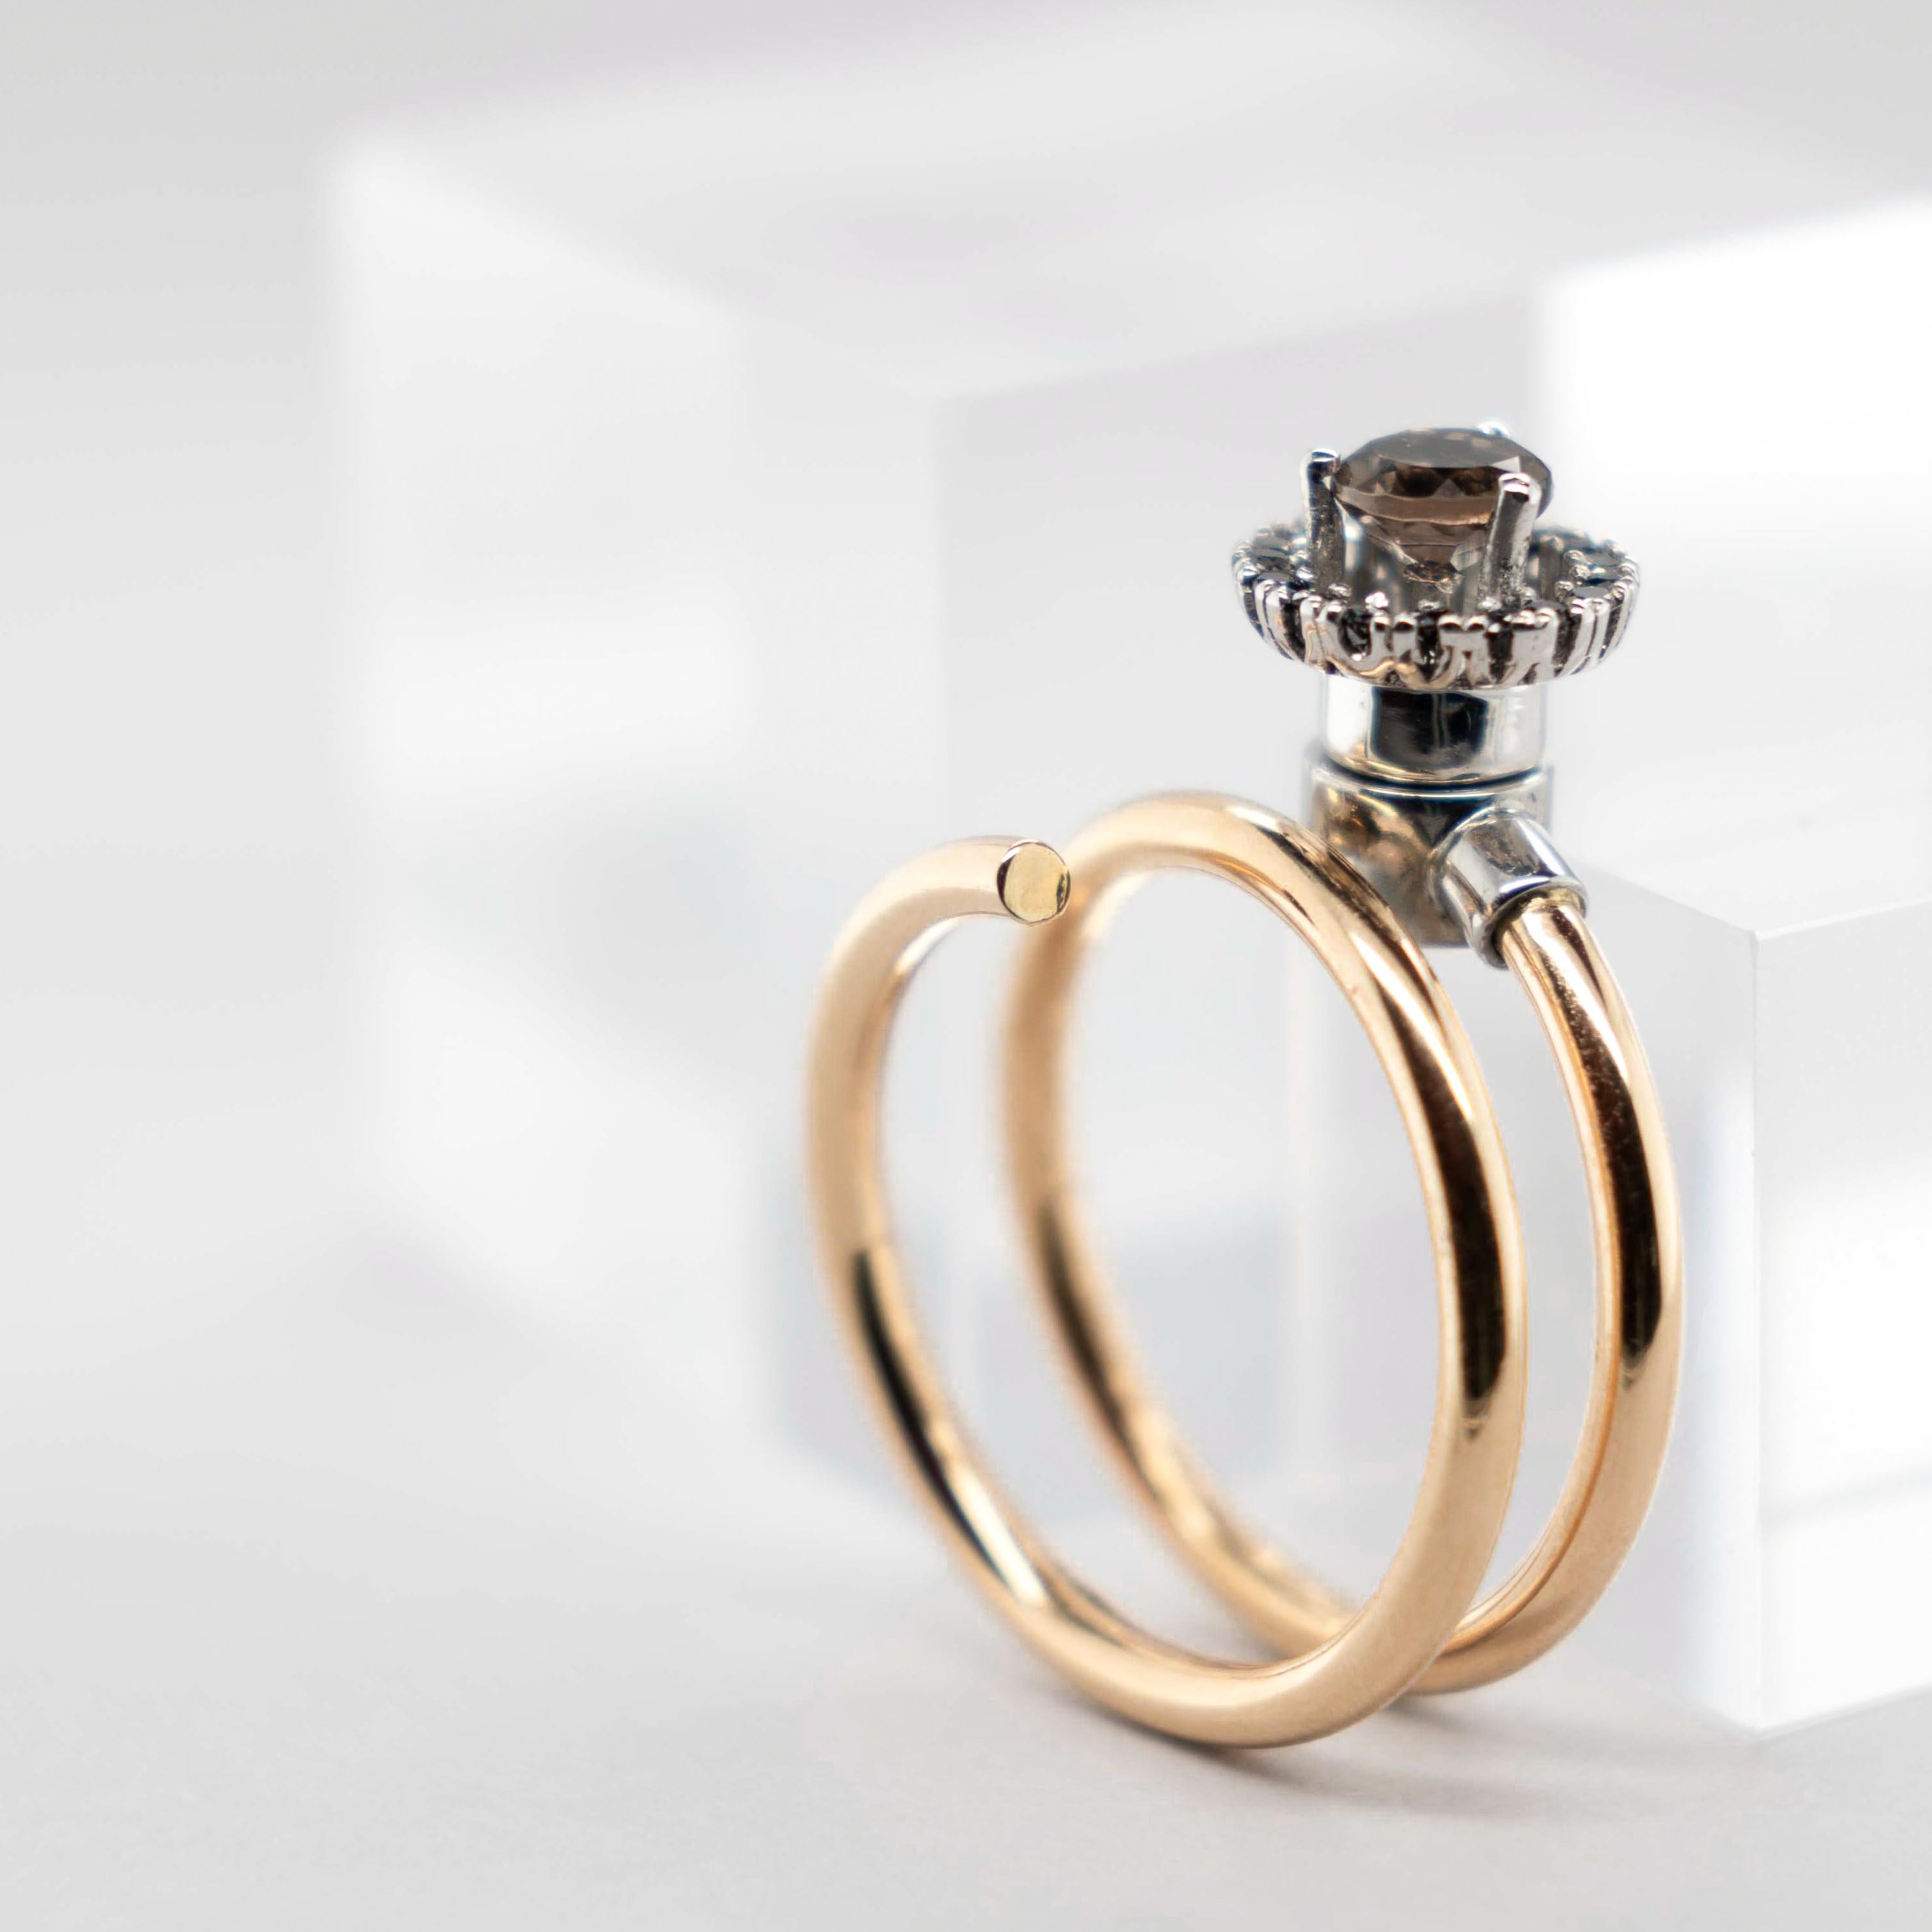 Brilliant Cut Halo Engagement Ring Diamonds & Smoked Quartz, 18K For Sale